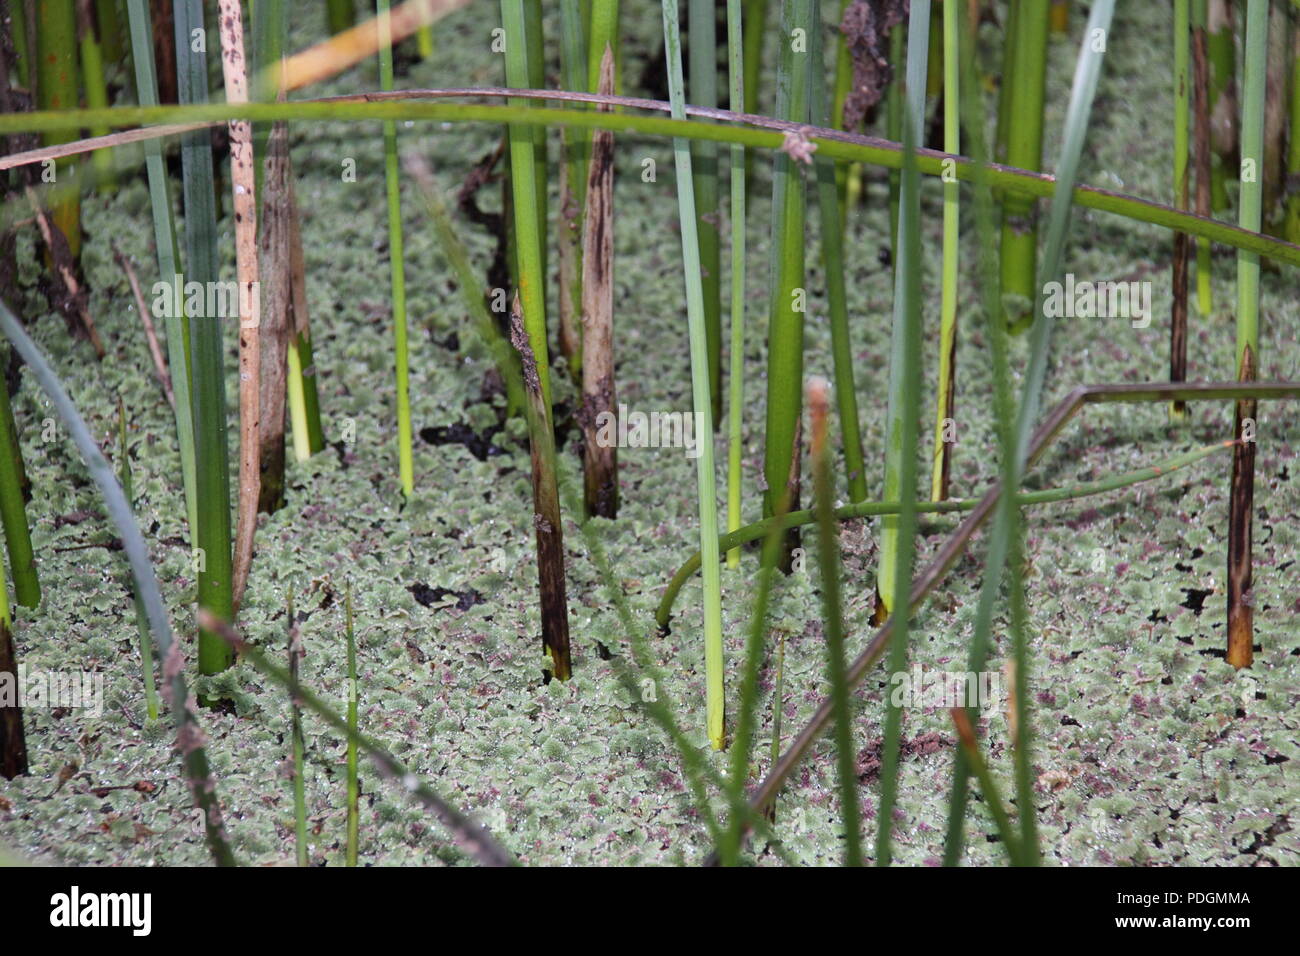 Green Algae surrounding stalks of Tall Spike-Rush (Eleocharis Sphacelata) Stock Photo